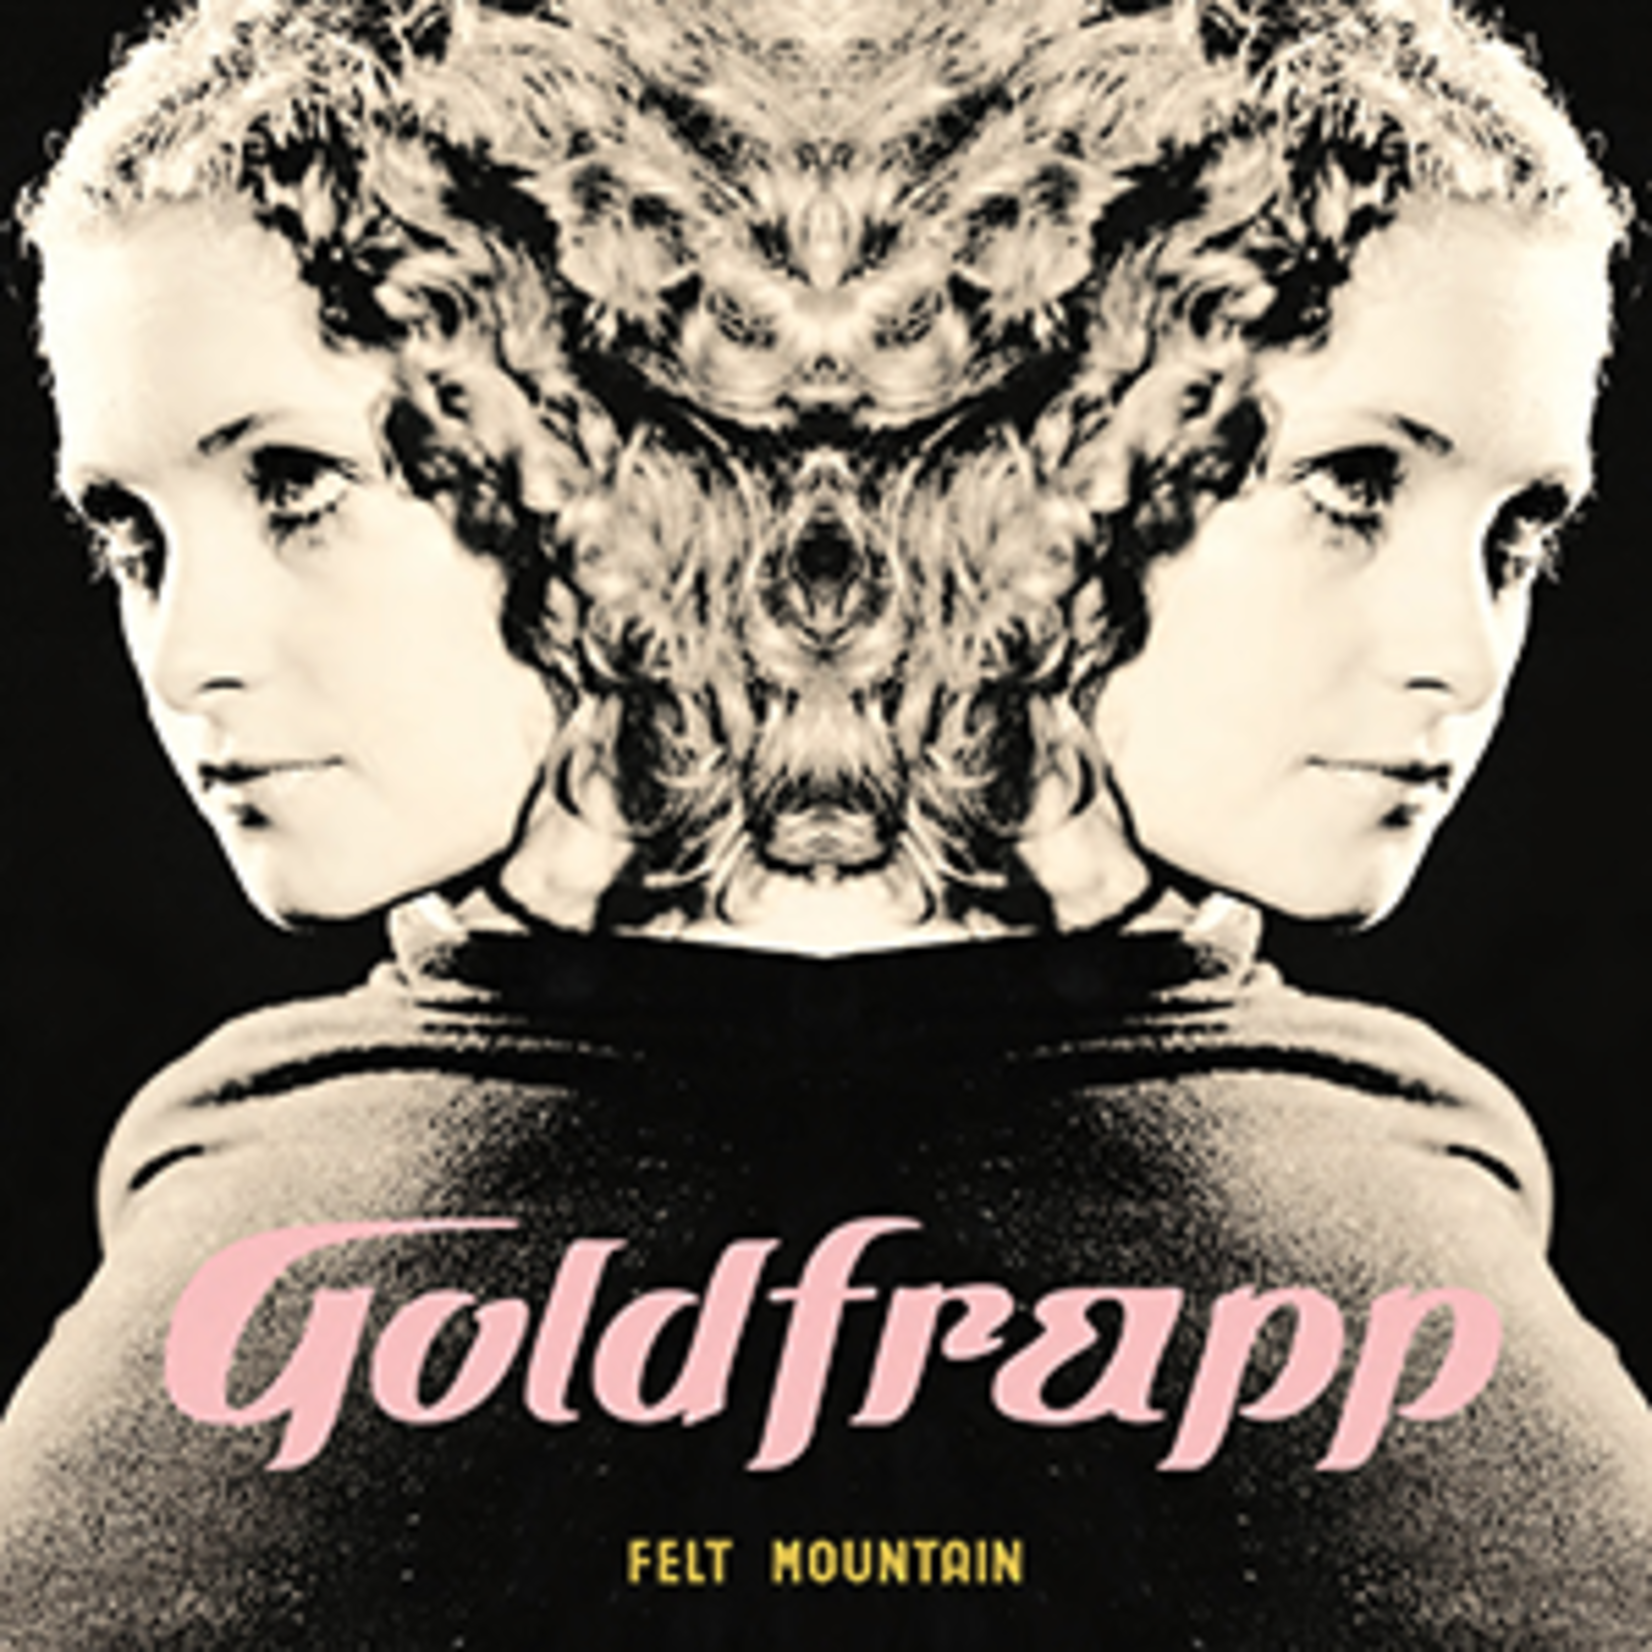 Goldfrapp - Felt Mountain (limited edition gold vinyl)